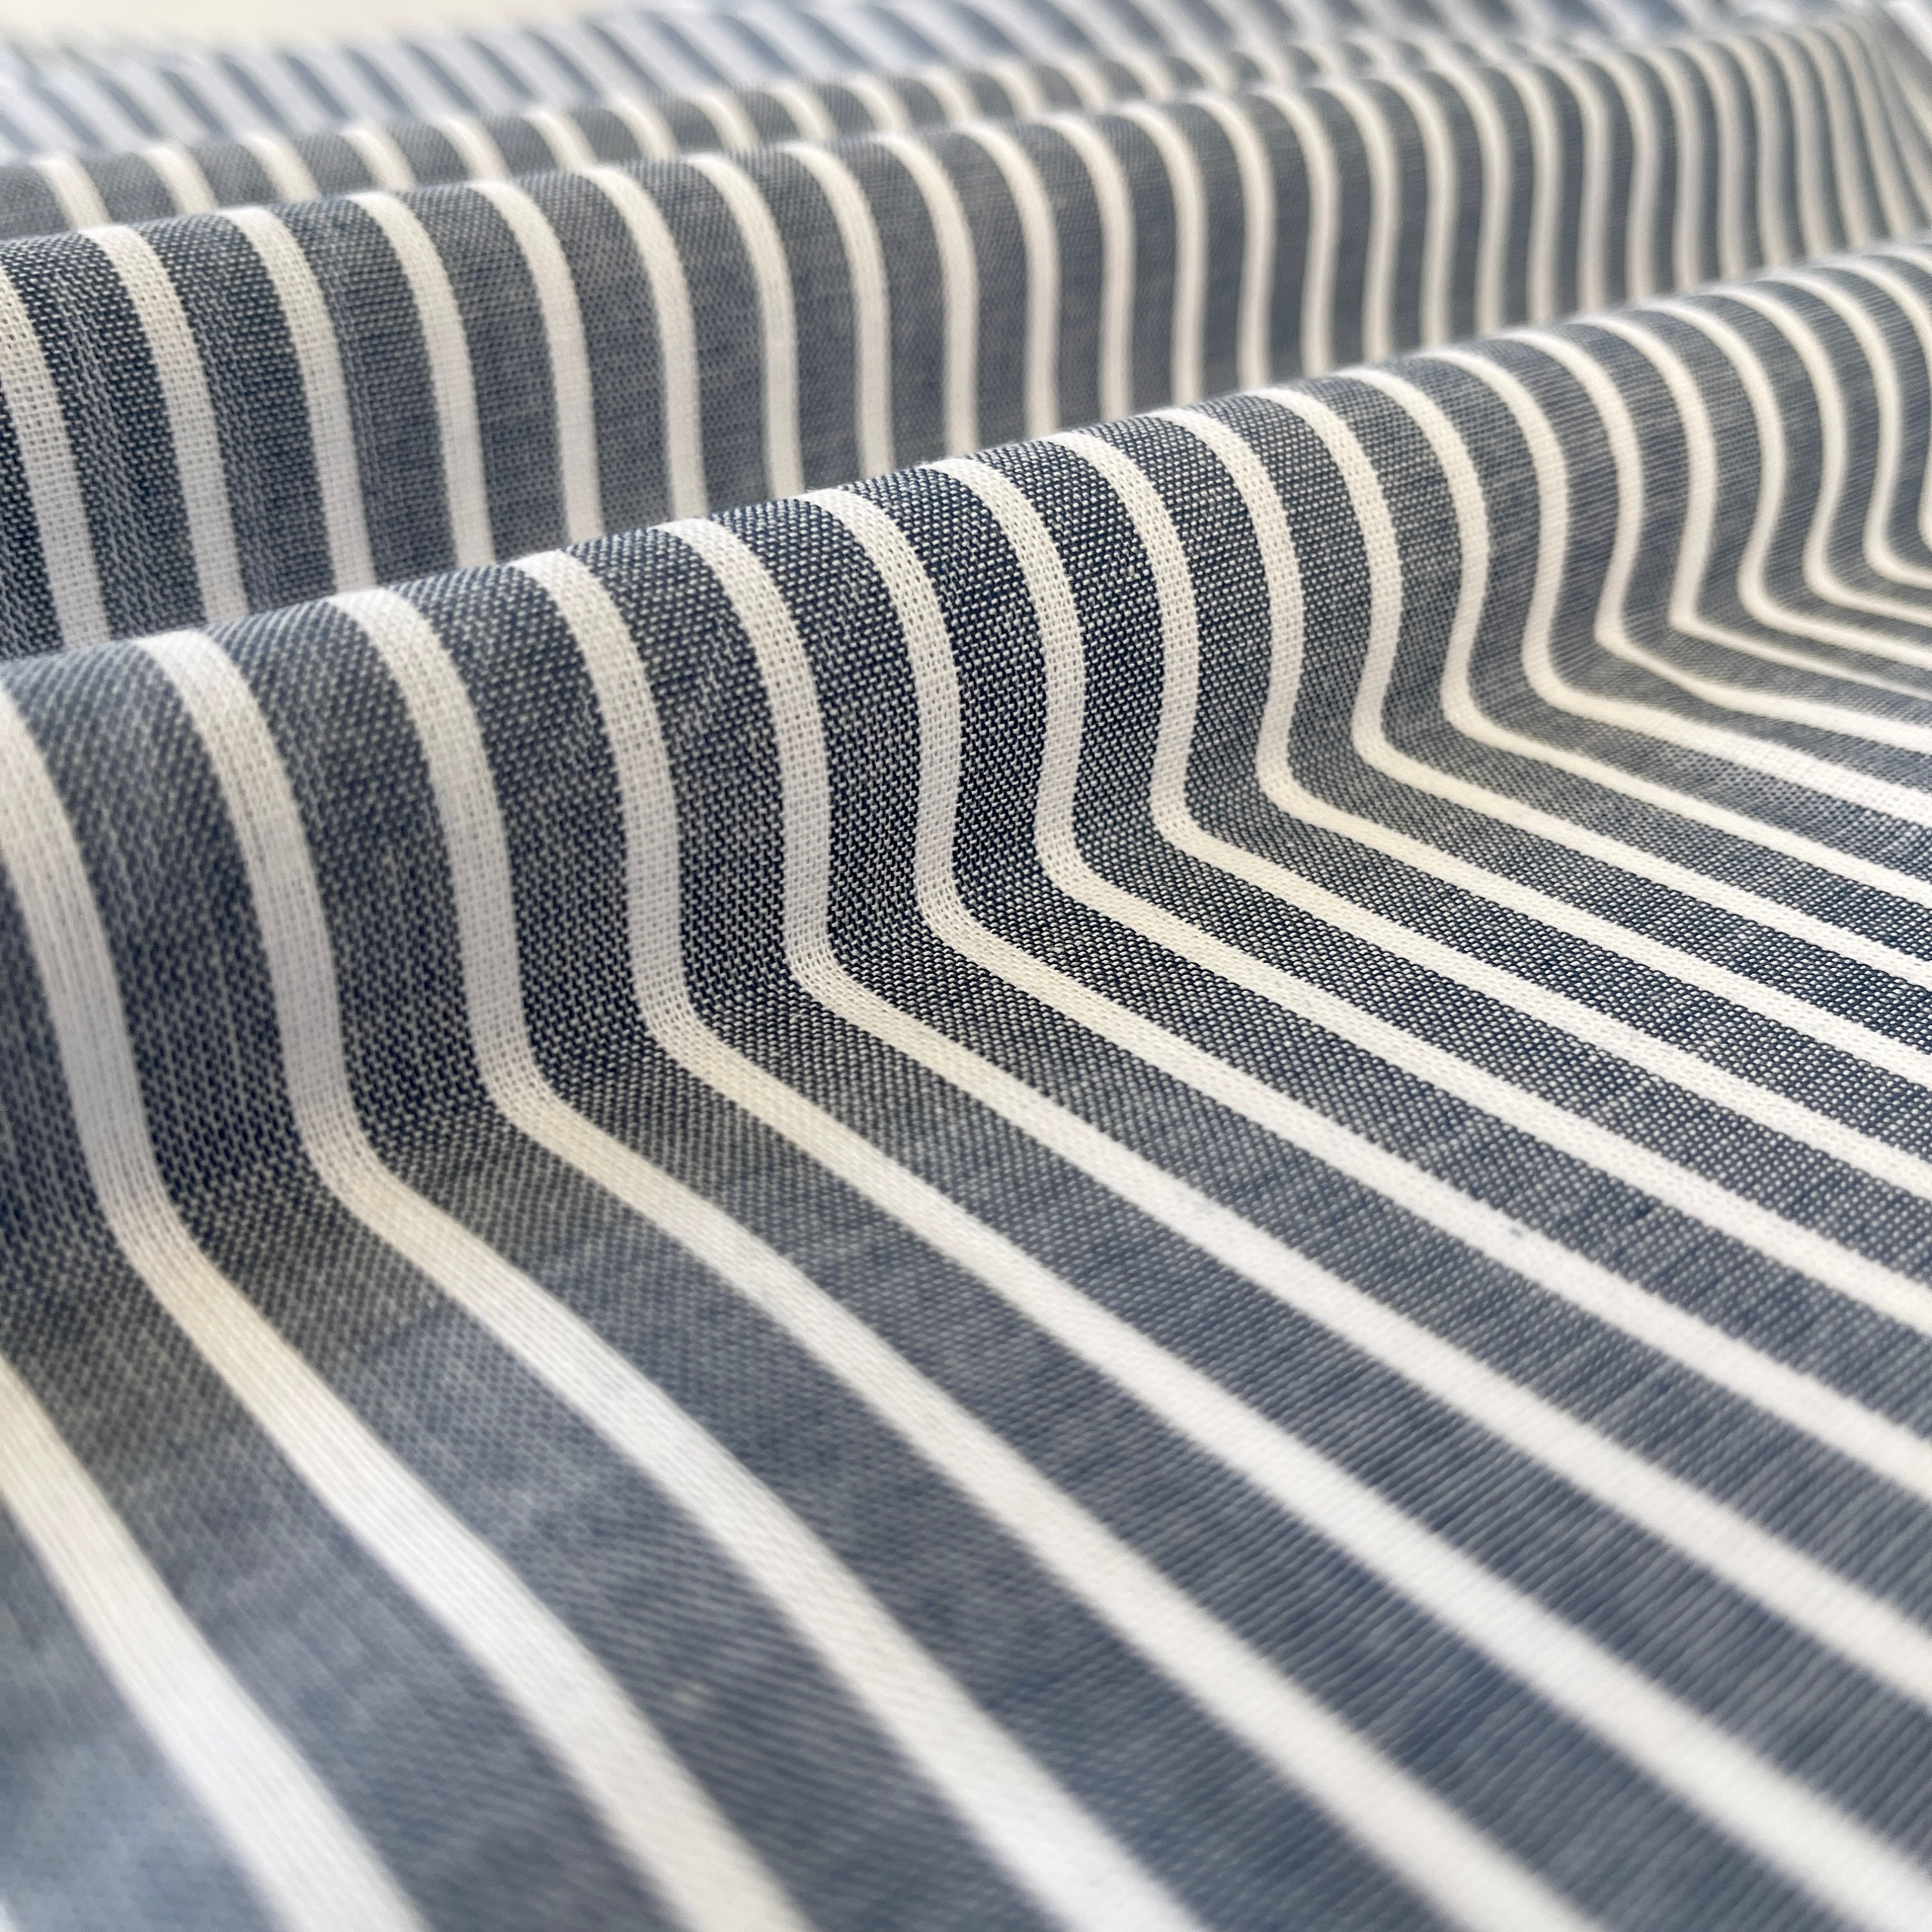 Cotton Poplin Lawn Stripe Fabric by The Yard Denim Jean look Shirting Shirt Dress  Fabric for Sewing Clothing - Blue White CN18